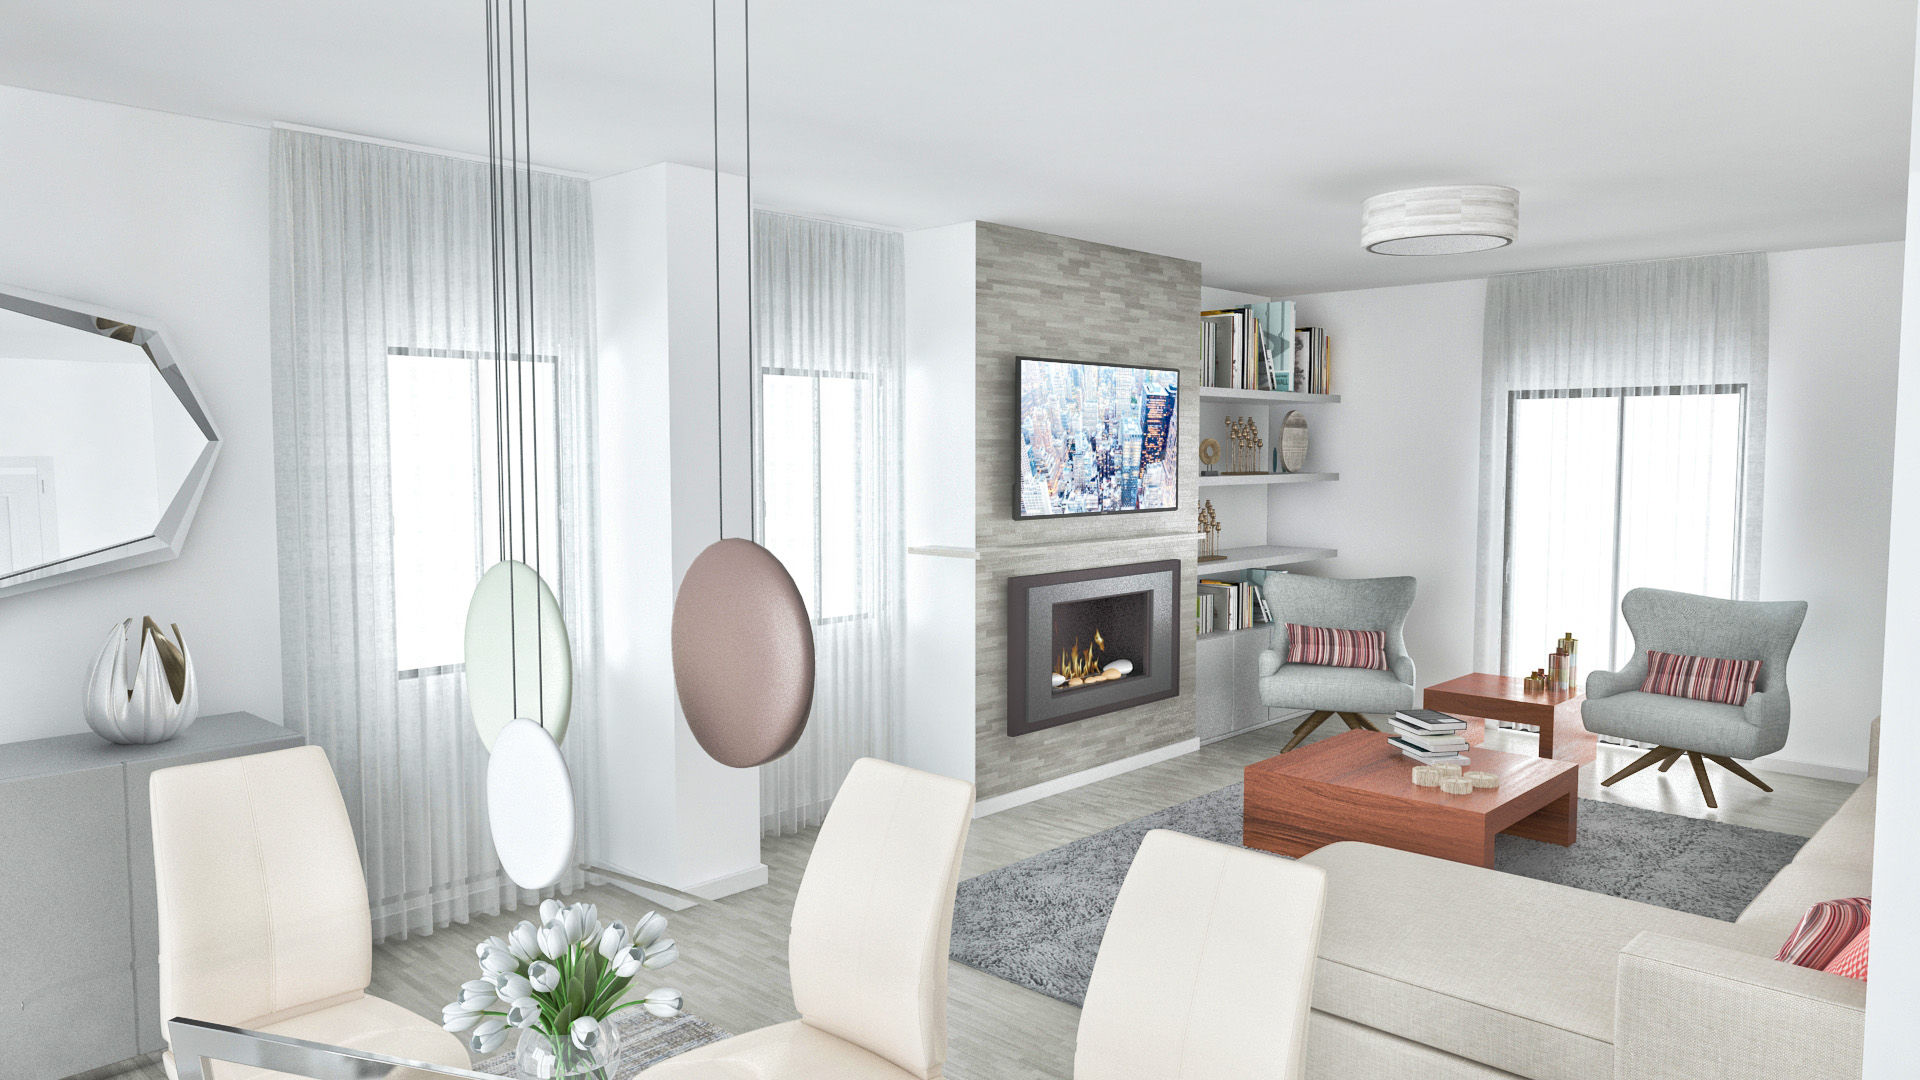 PROJETOS: 3D, INTERDOBLE BY MARTA SILVA - Design de Interiores INTERDOBLE BY MARTA SILVA - Design de Interiores Livings de estilo clásico